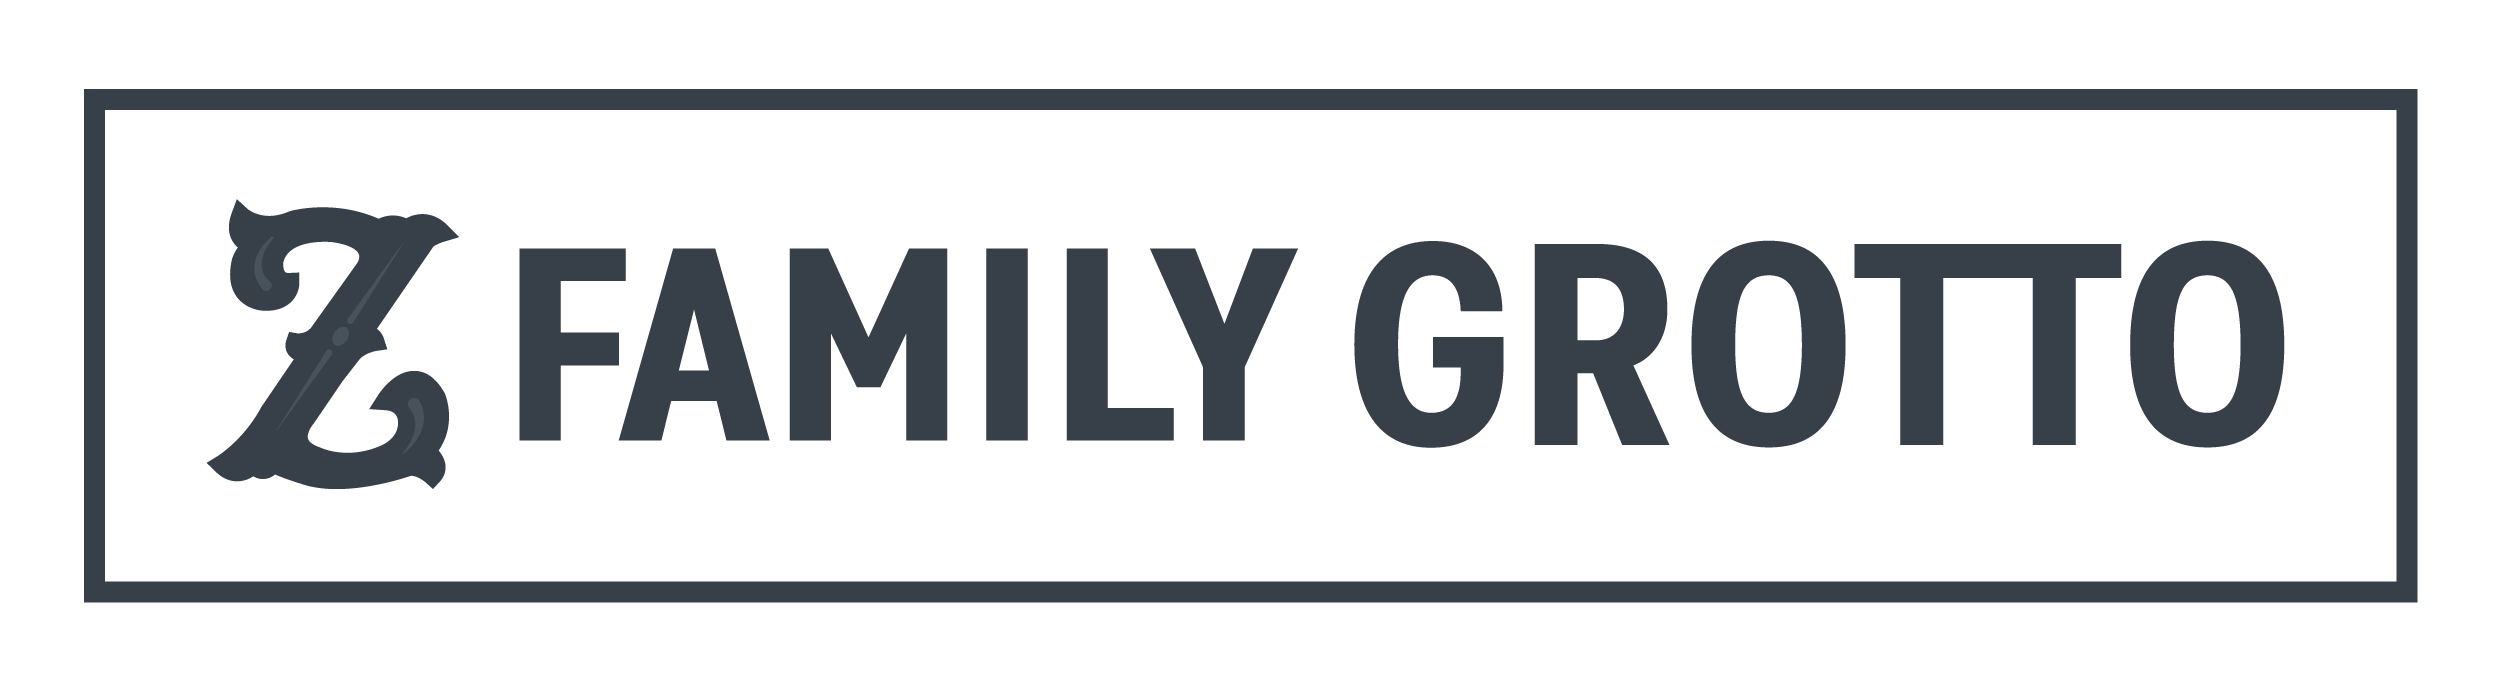 Family Grotto Logo